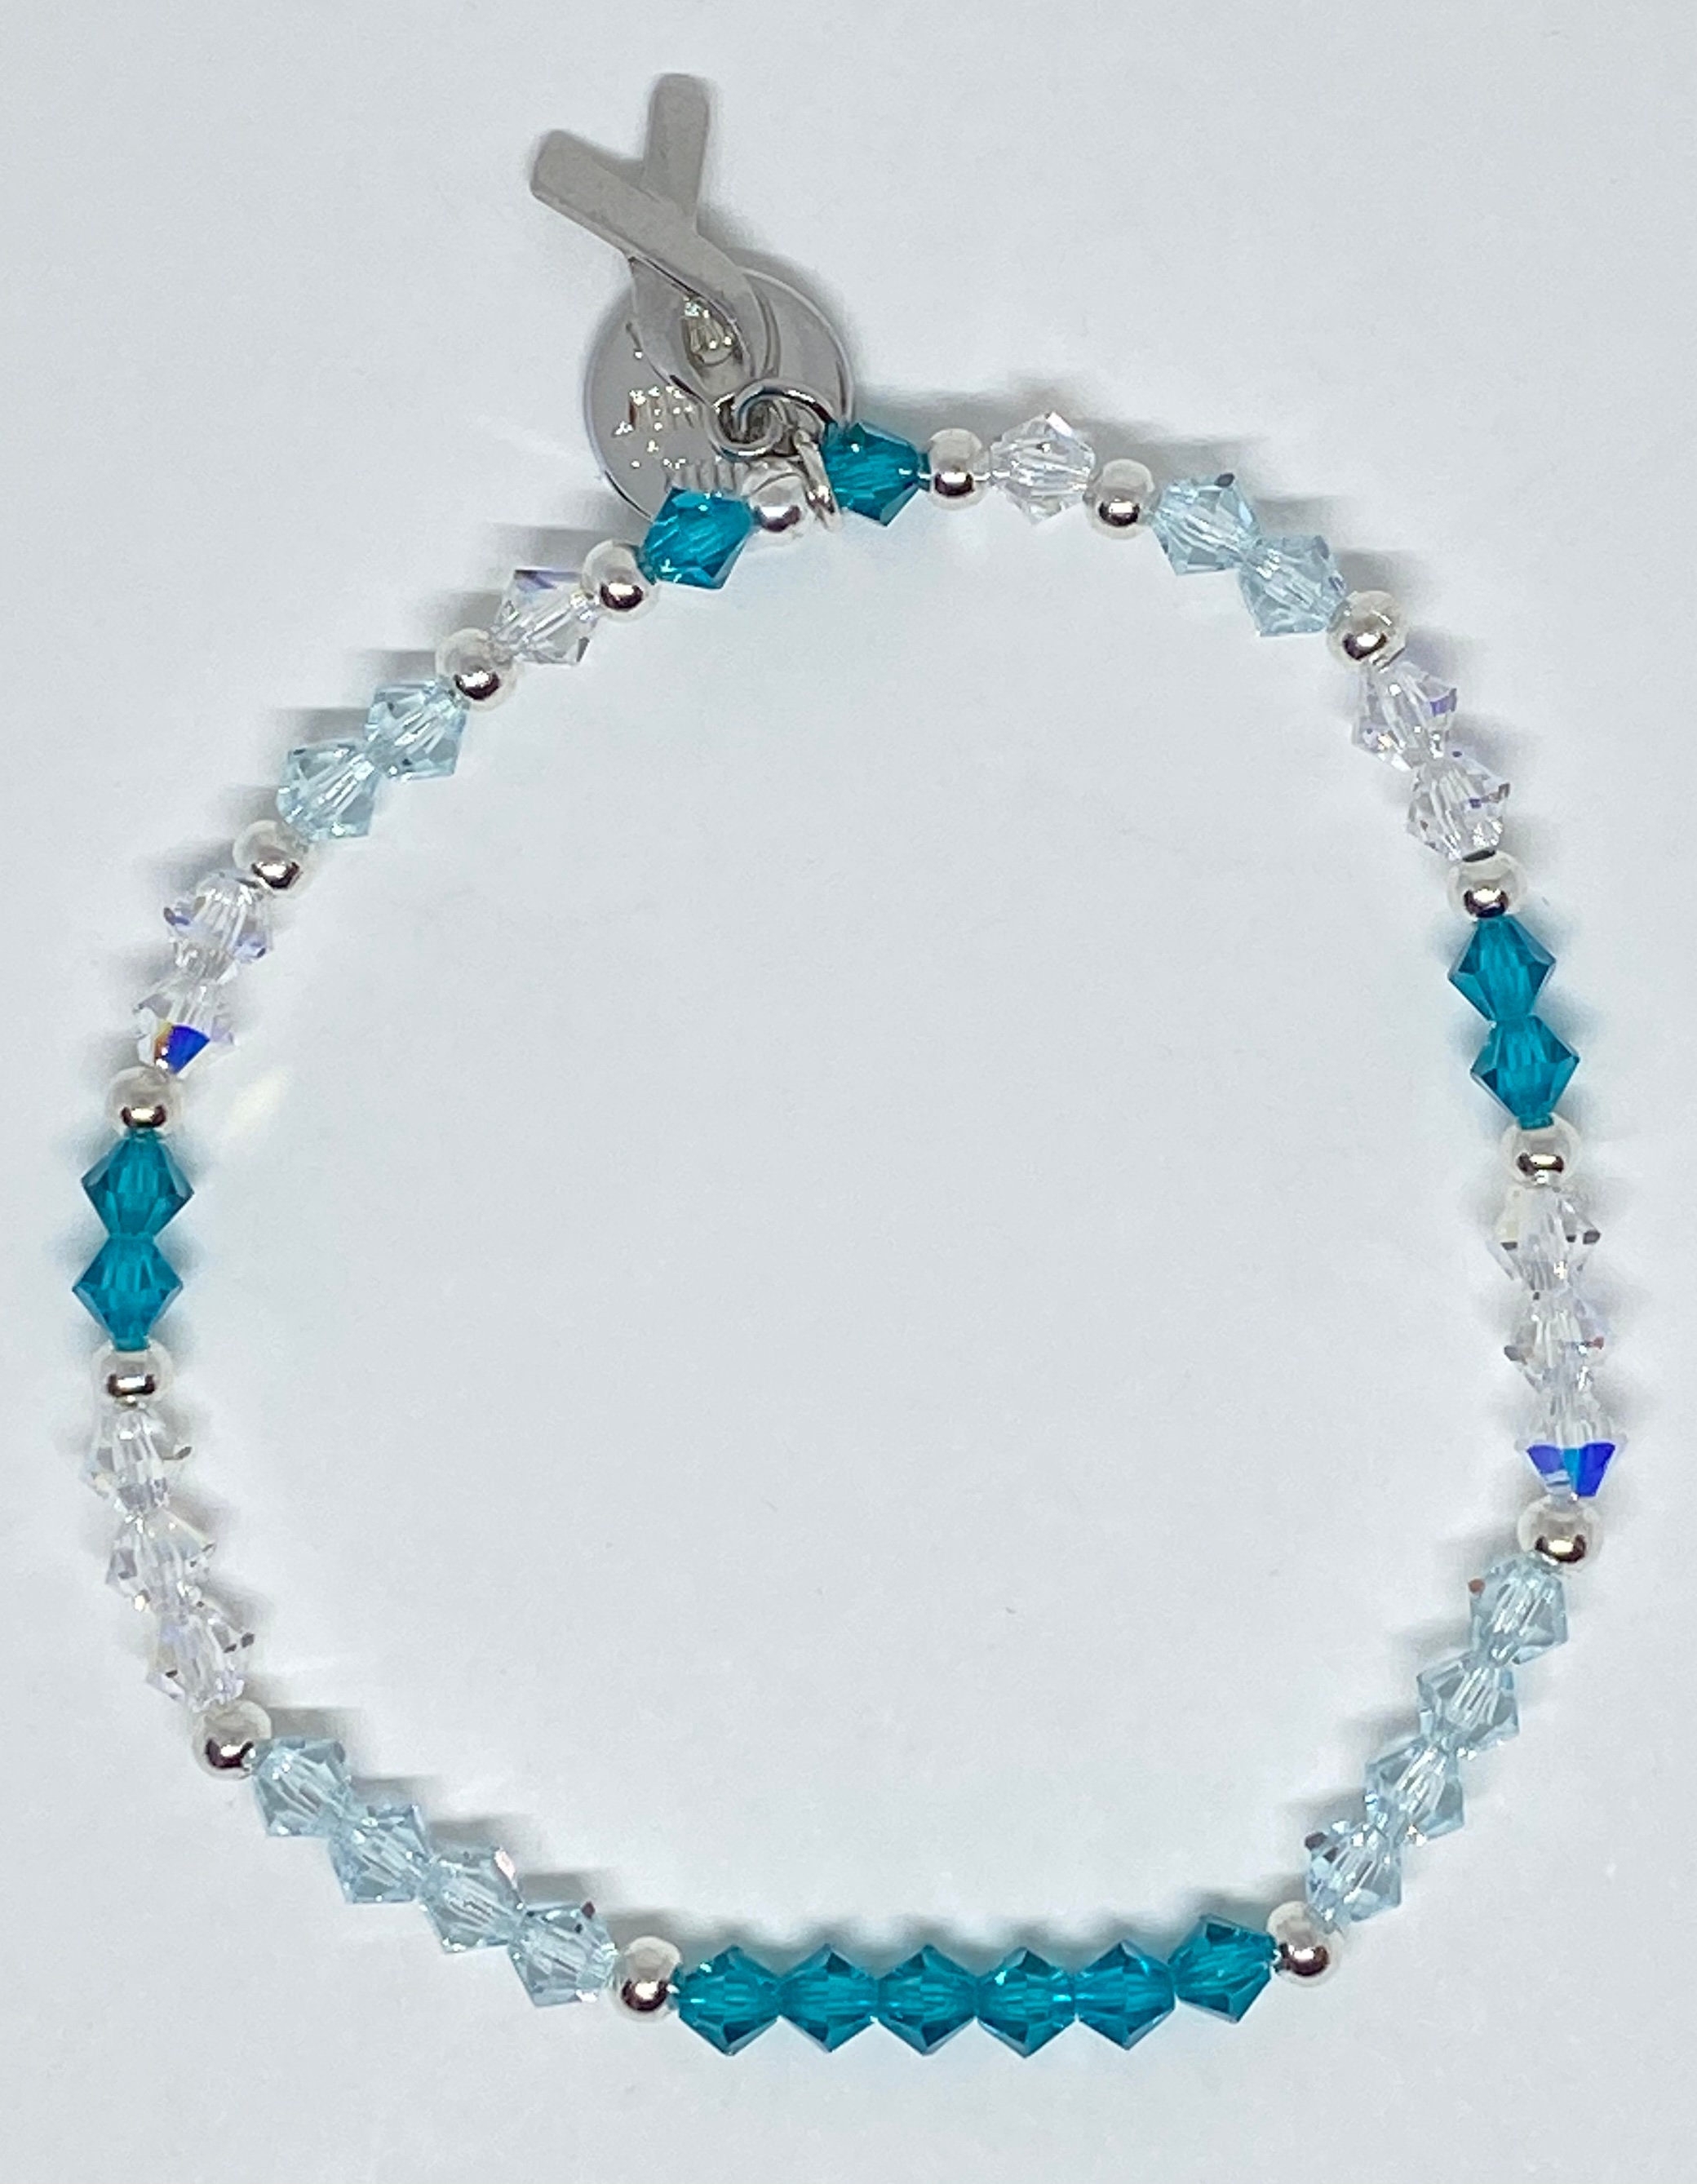 Dana Dow Jewellers Swarovski Letra bracelet Moon White Goldtone plated  5615863  Limited Edition  Southcentre Mall